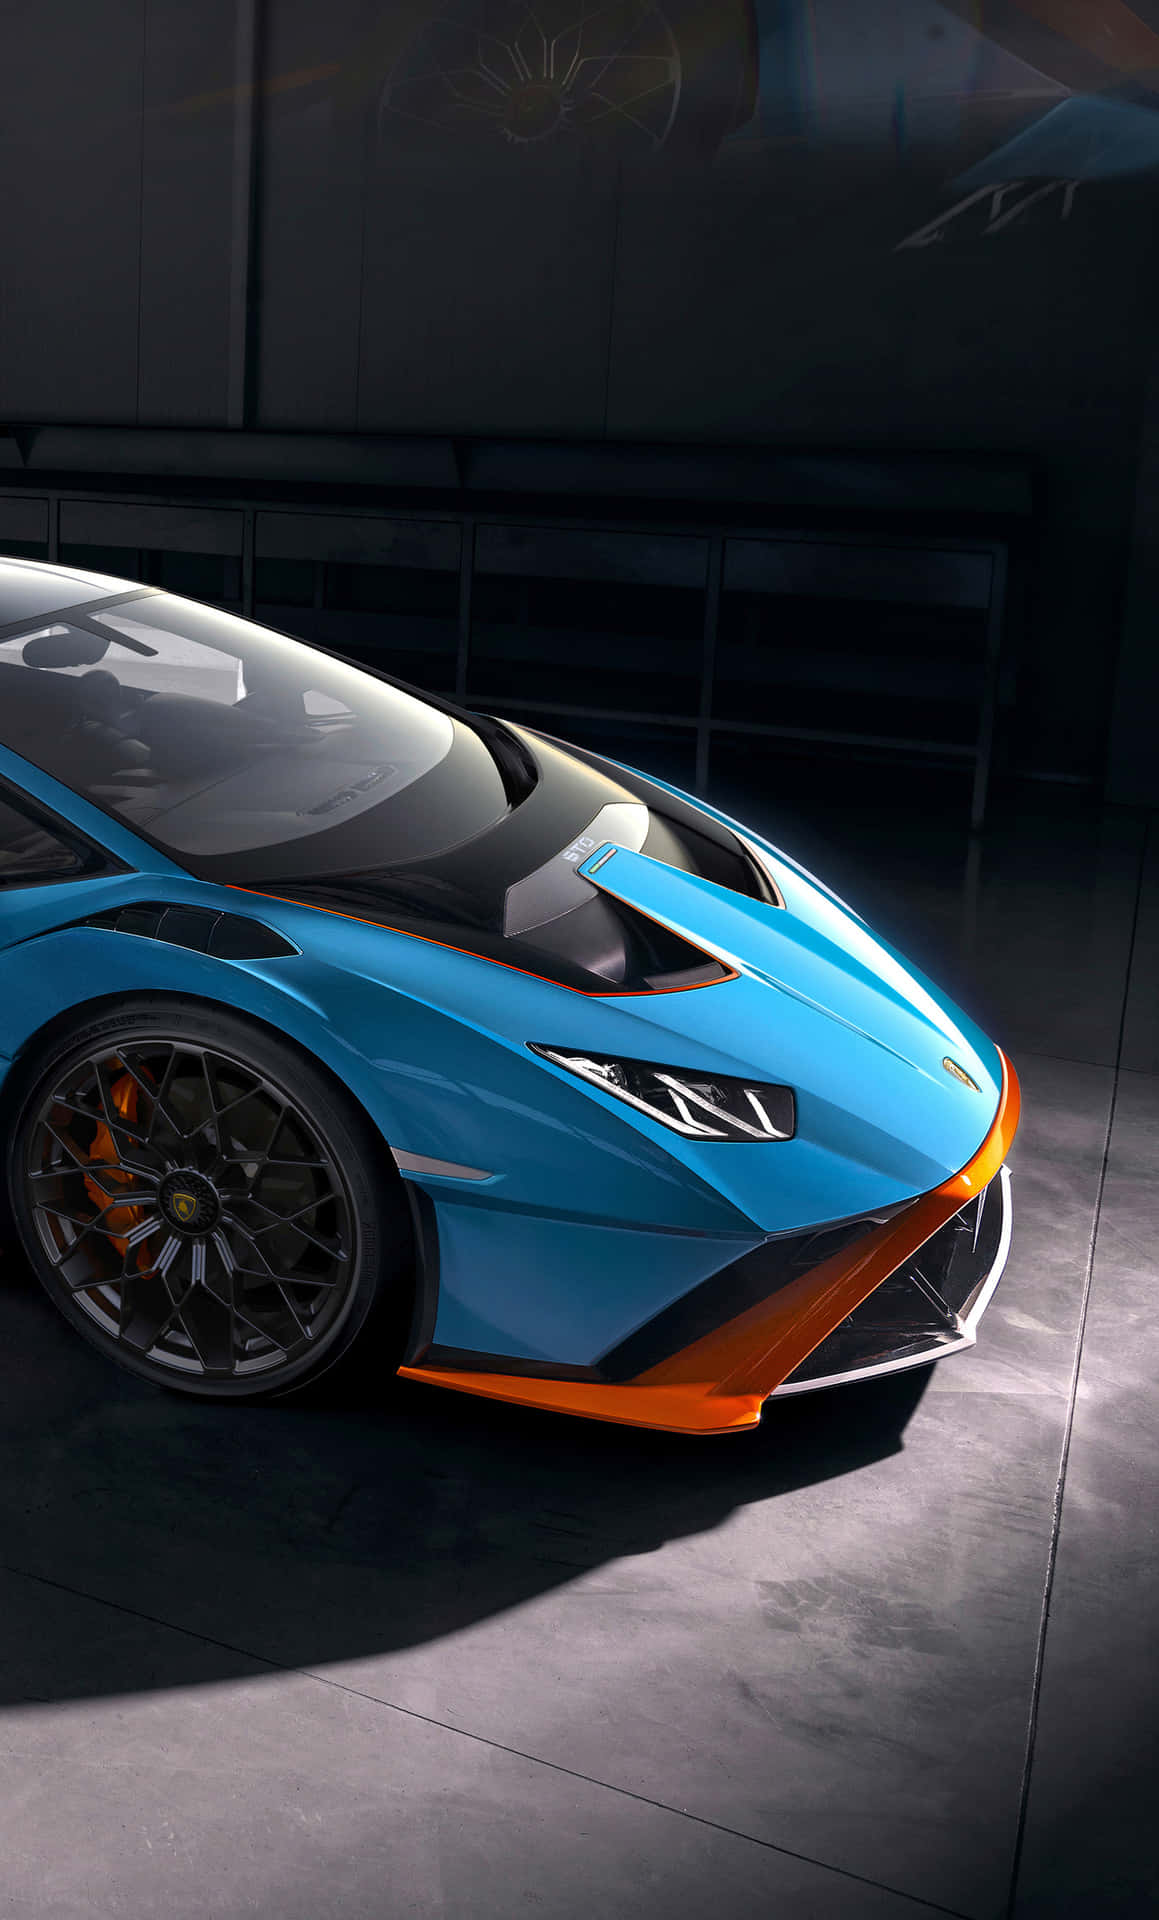 Get behind the wheel of an electric blue Lamborghini Wallpaper